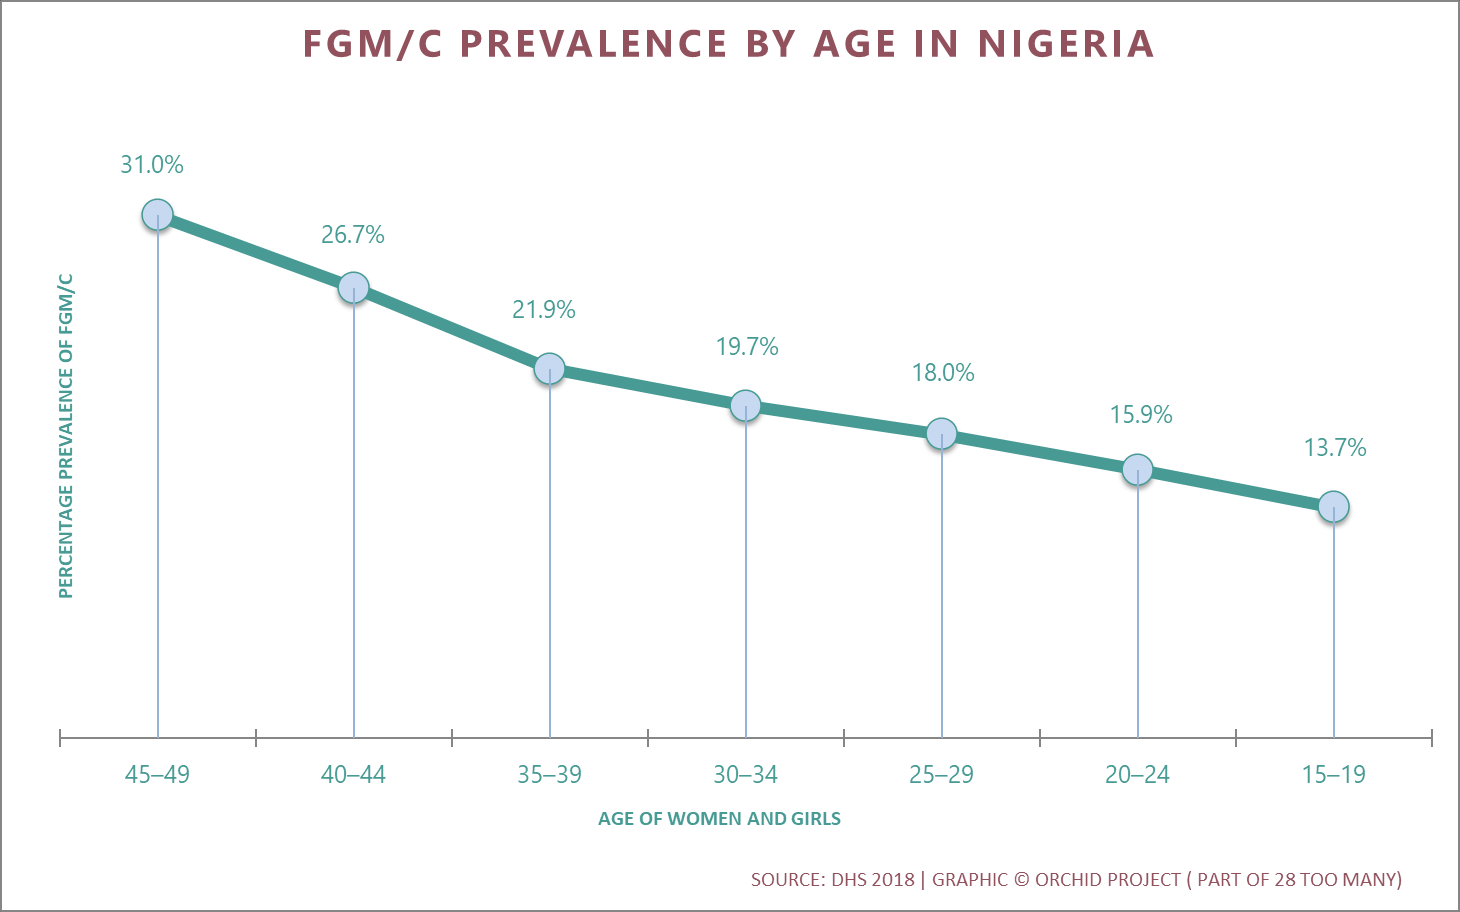 Trends in FGM/C Prevalence